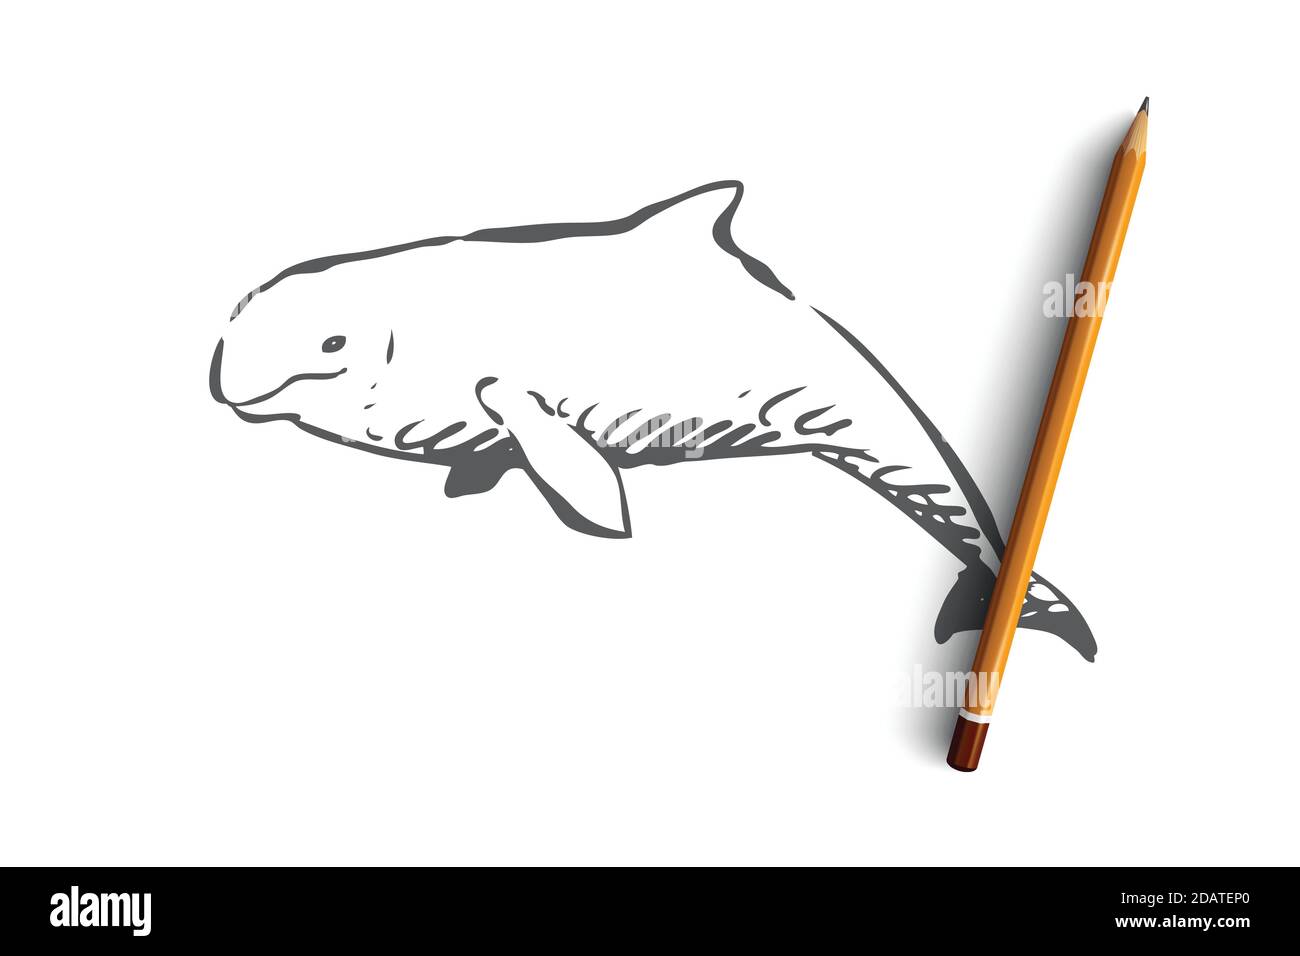 Beluga, sea, water, wildlife, hausen concept. Hand drawn isolated vector. Stock Vector